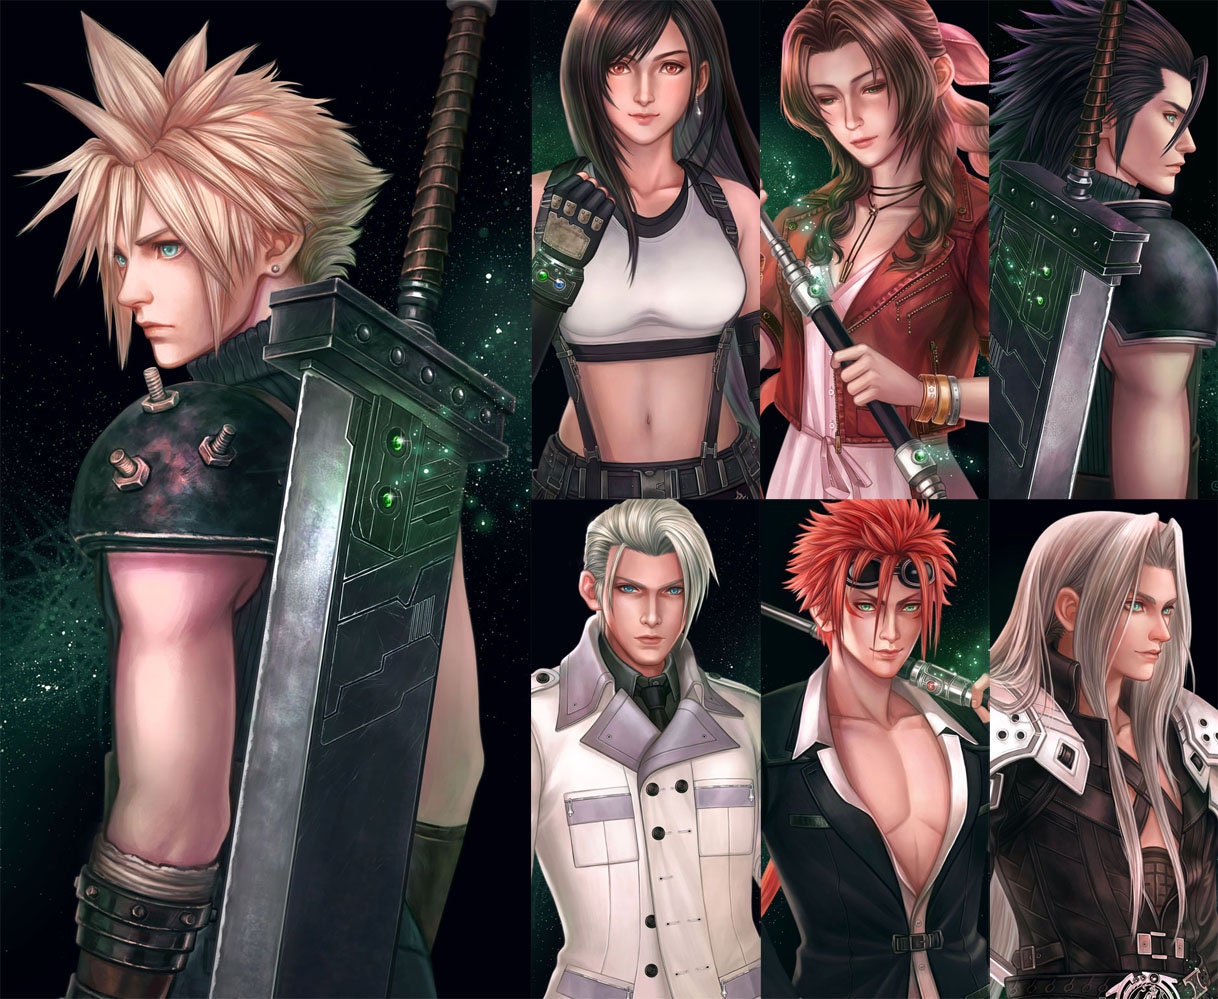 Final Fantasy VII Remake / FF7R Art Print / Poster 